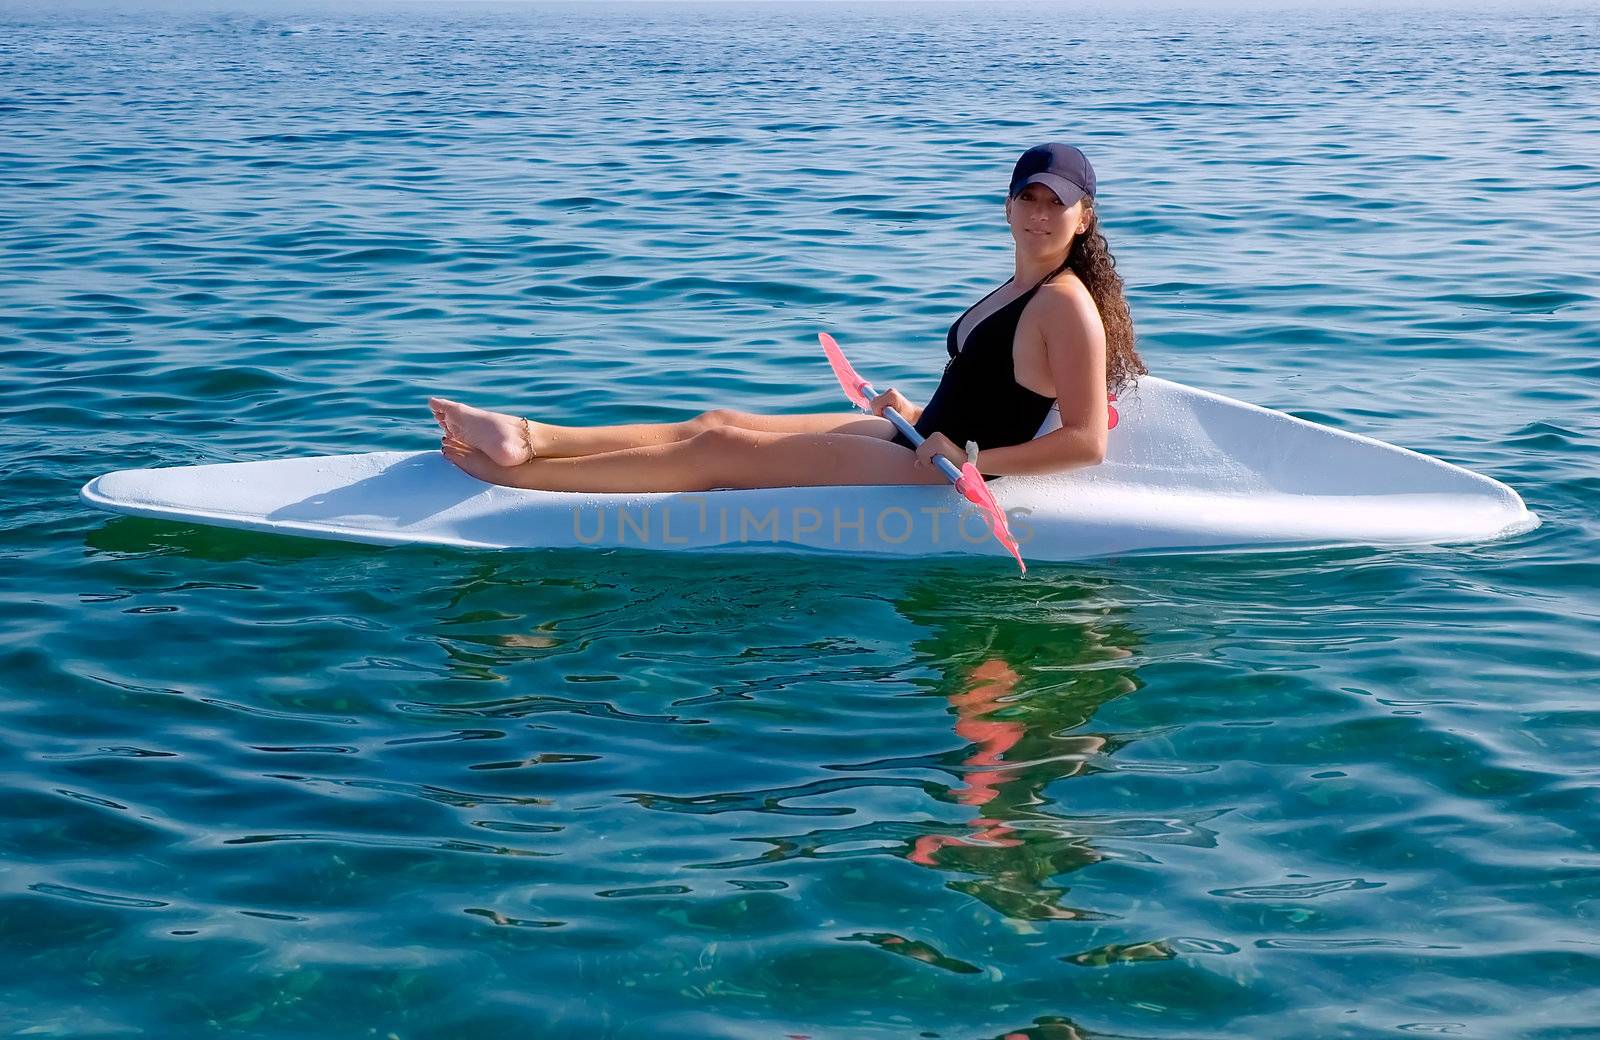 Teenage girl in a canoe